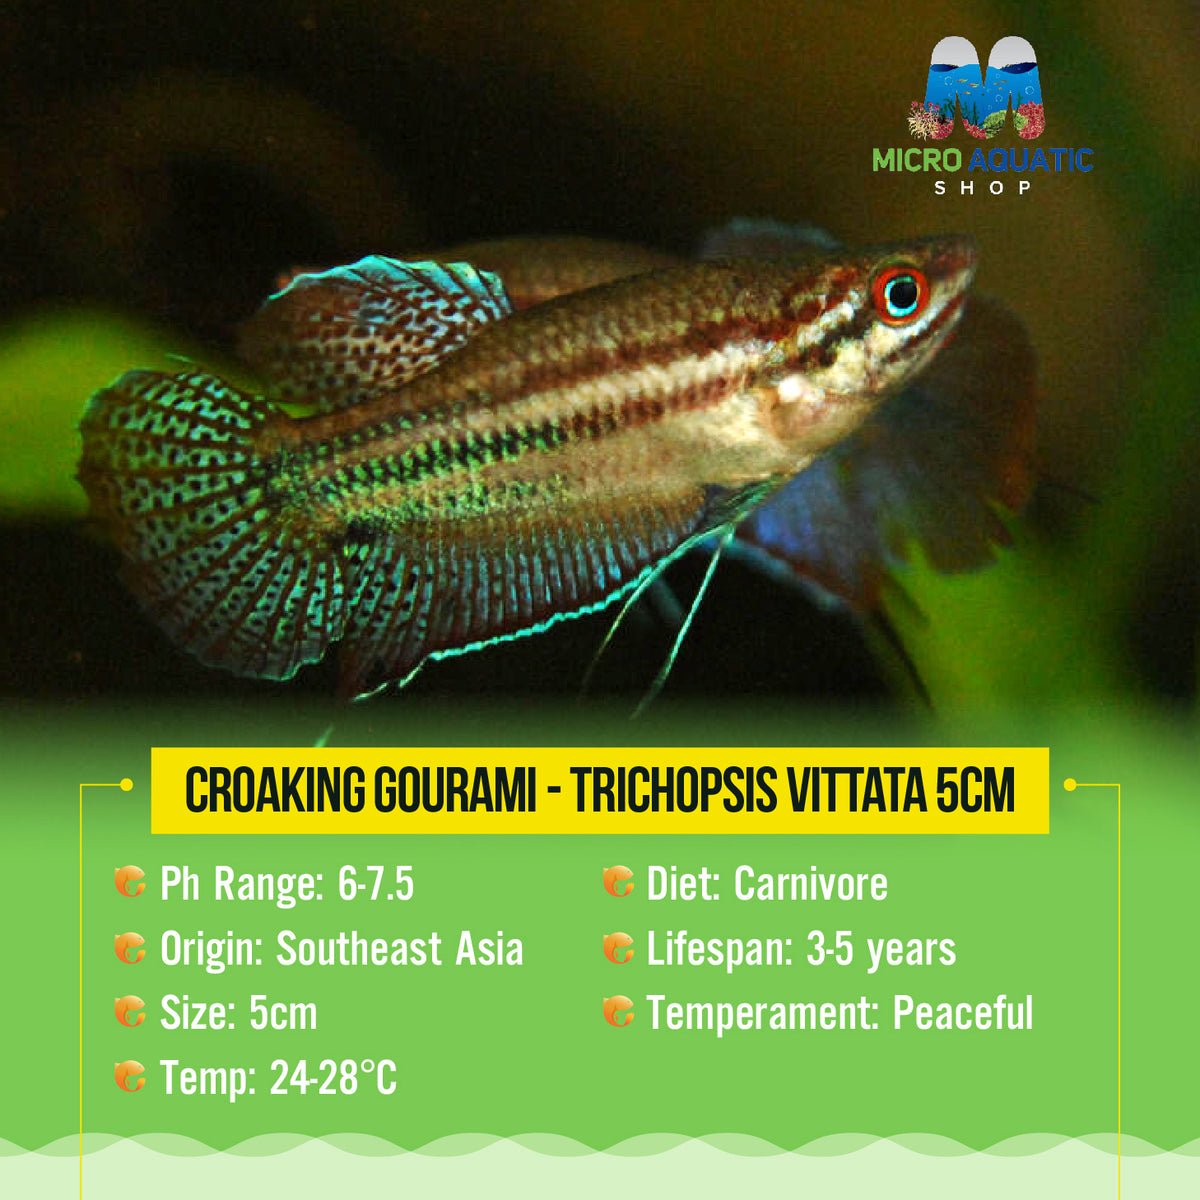 Croaking gourami - Trichopsis vittata 5cm